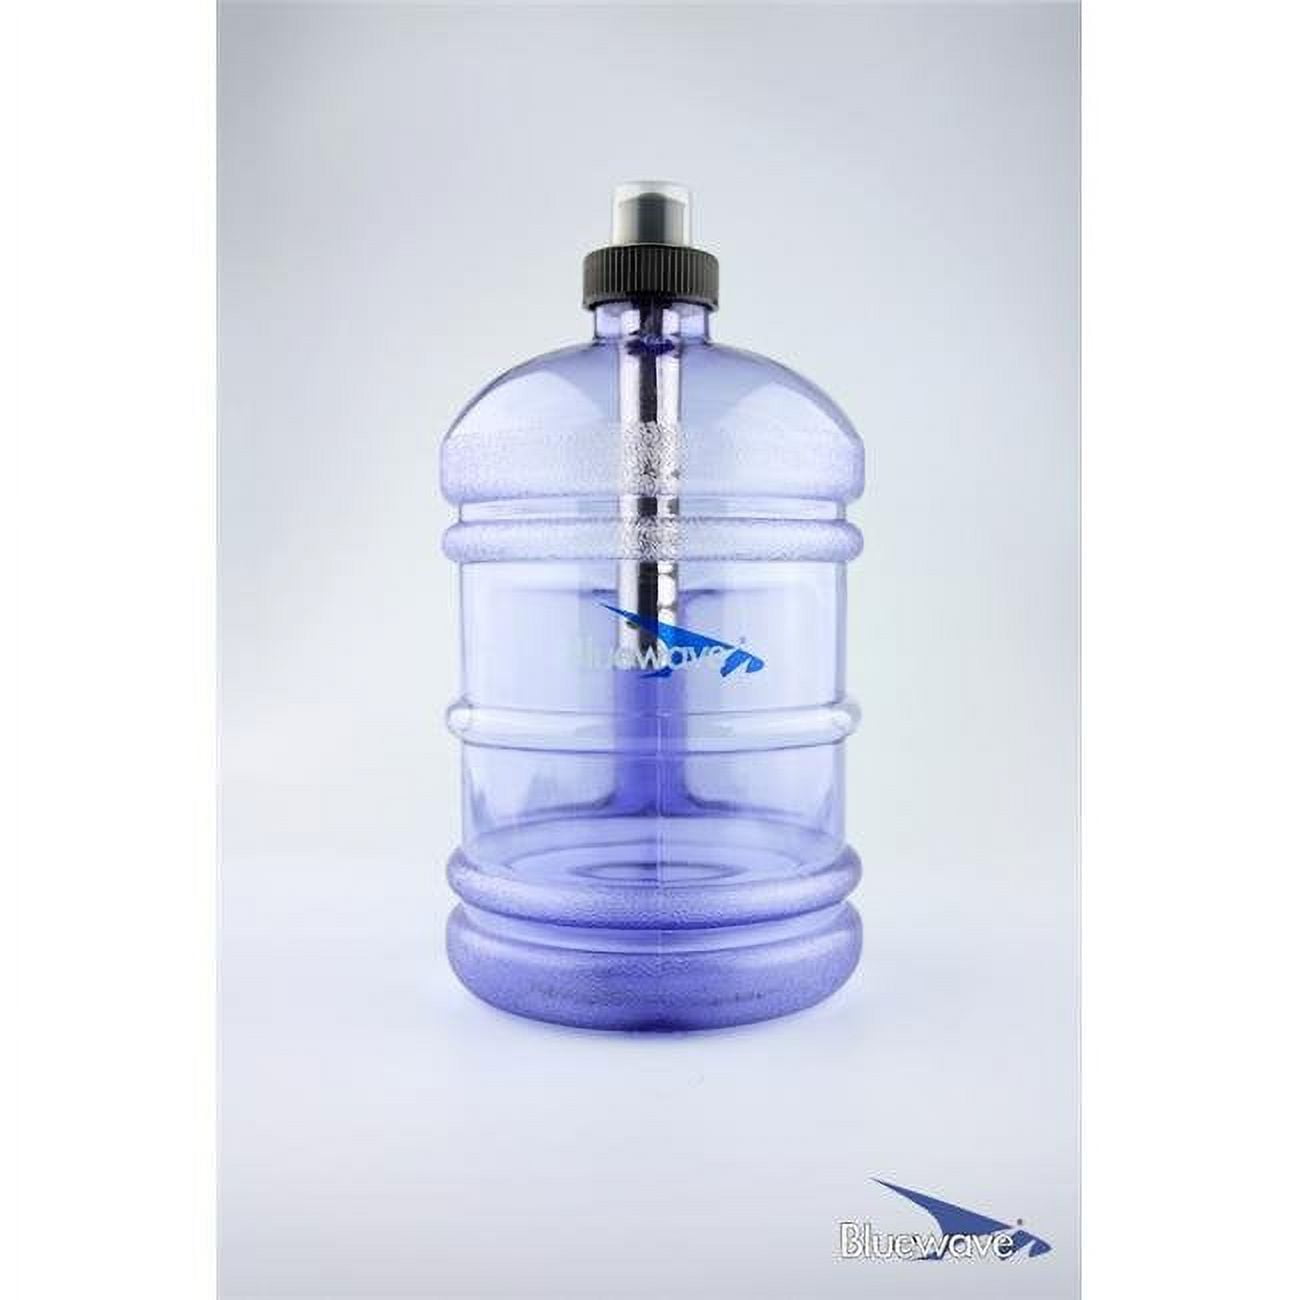 Pk19lh-55-purple Bluewave Daily 8 Bpa Free Reusable Water Jug - 64 Oz., Iris Purple